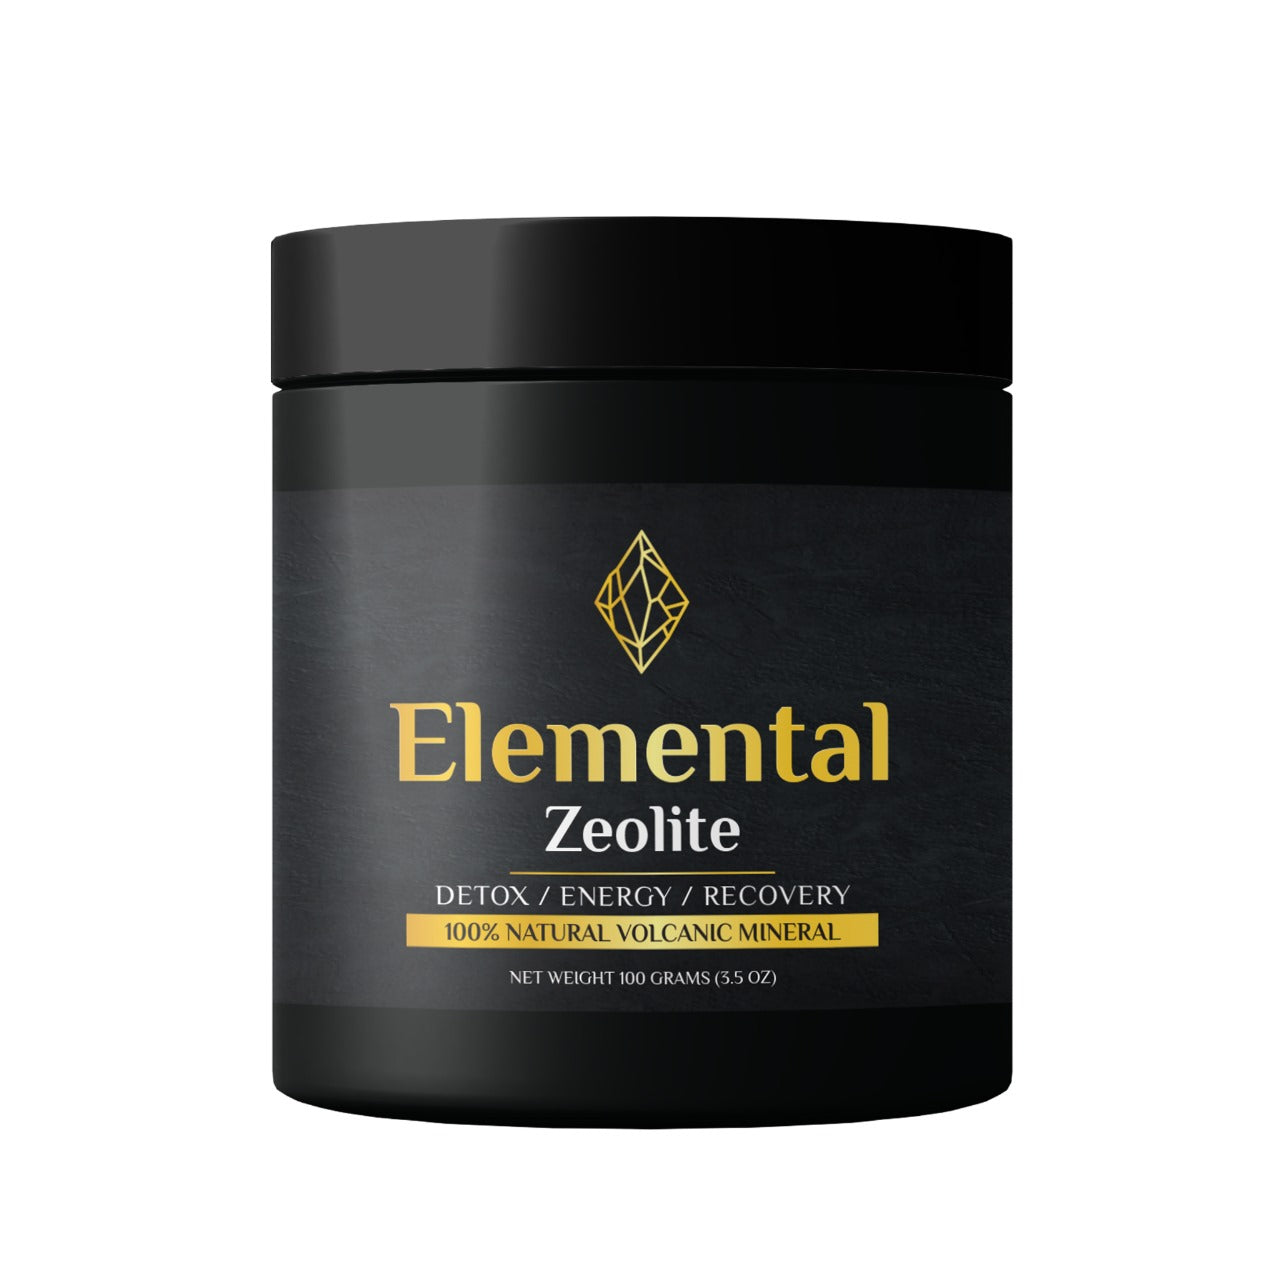 Elemental Zeolite